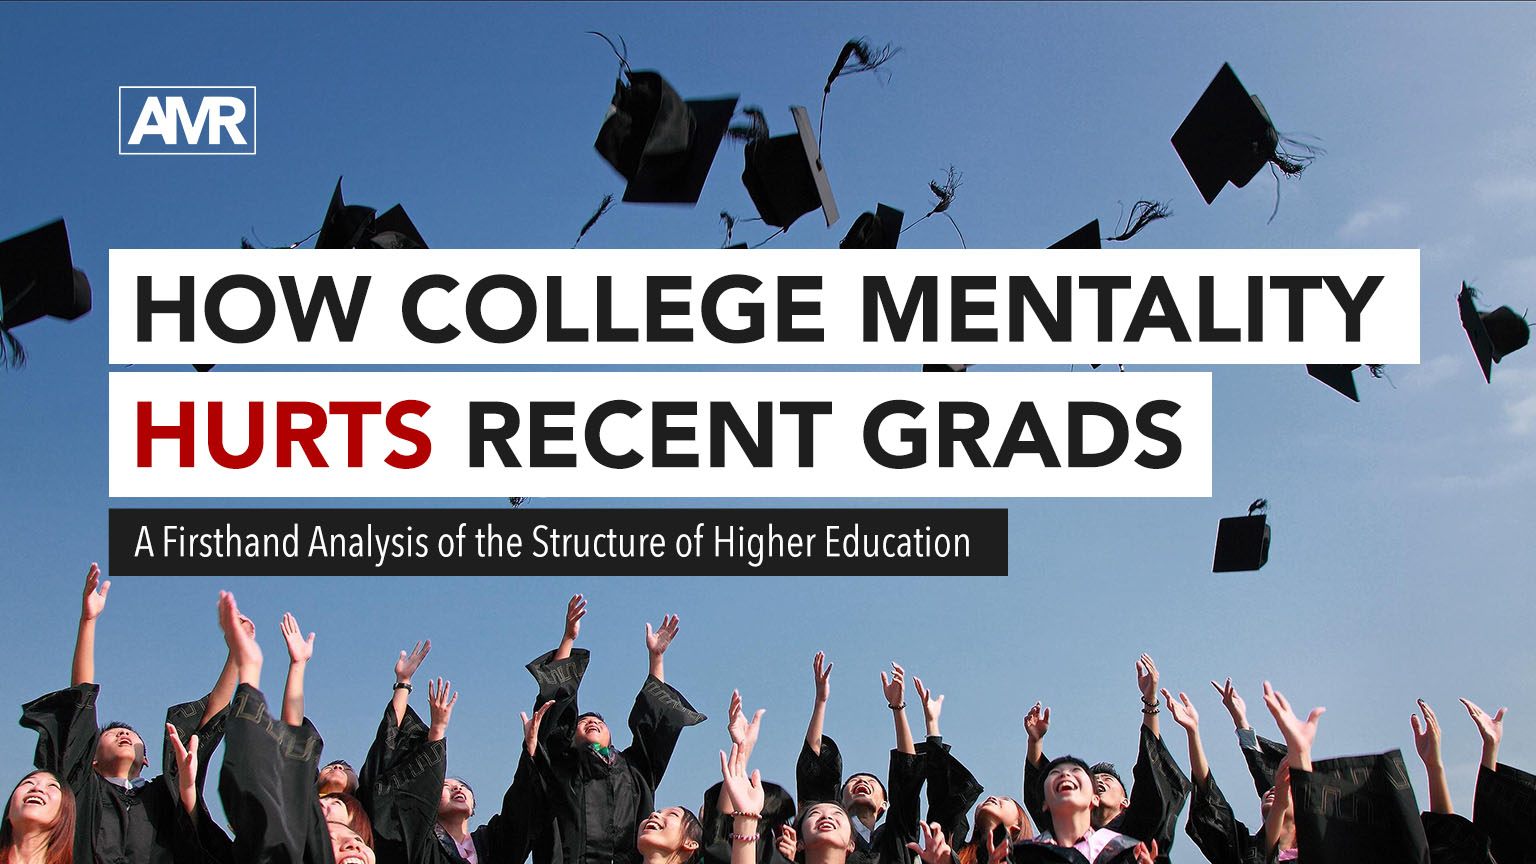 College Mentality cover - university graduates throwing caps